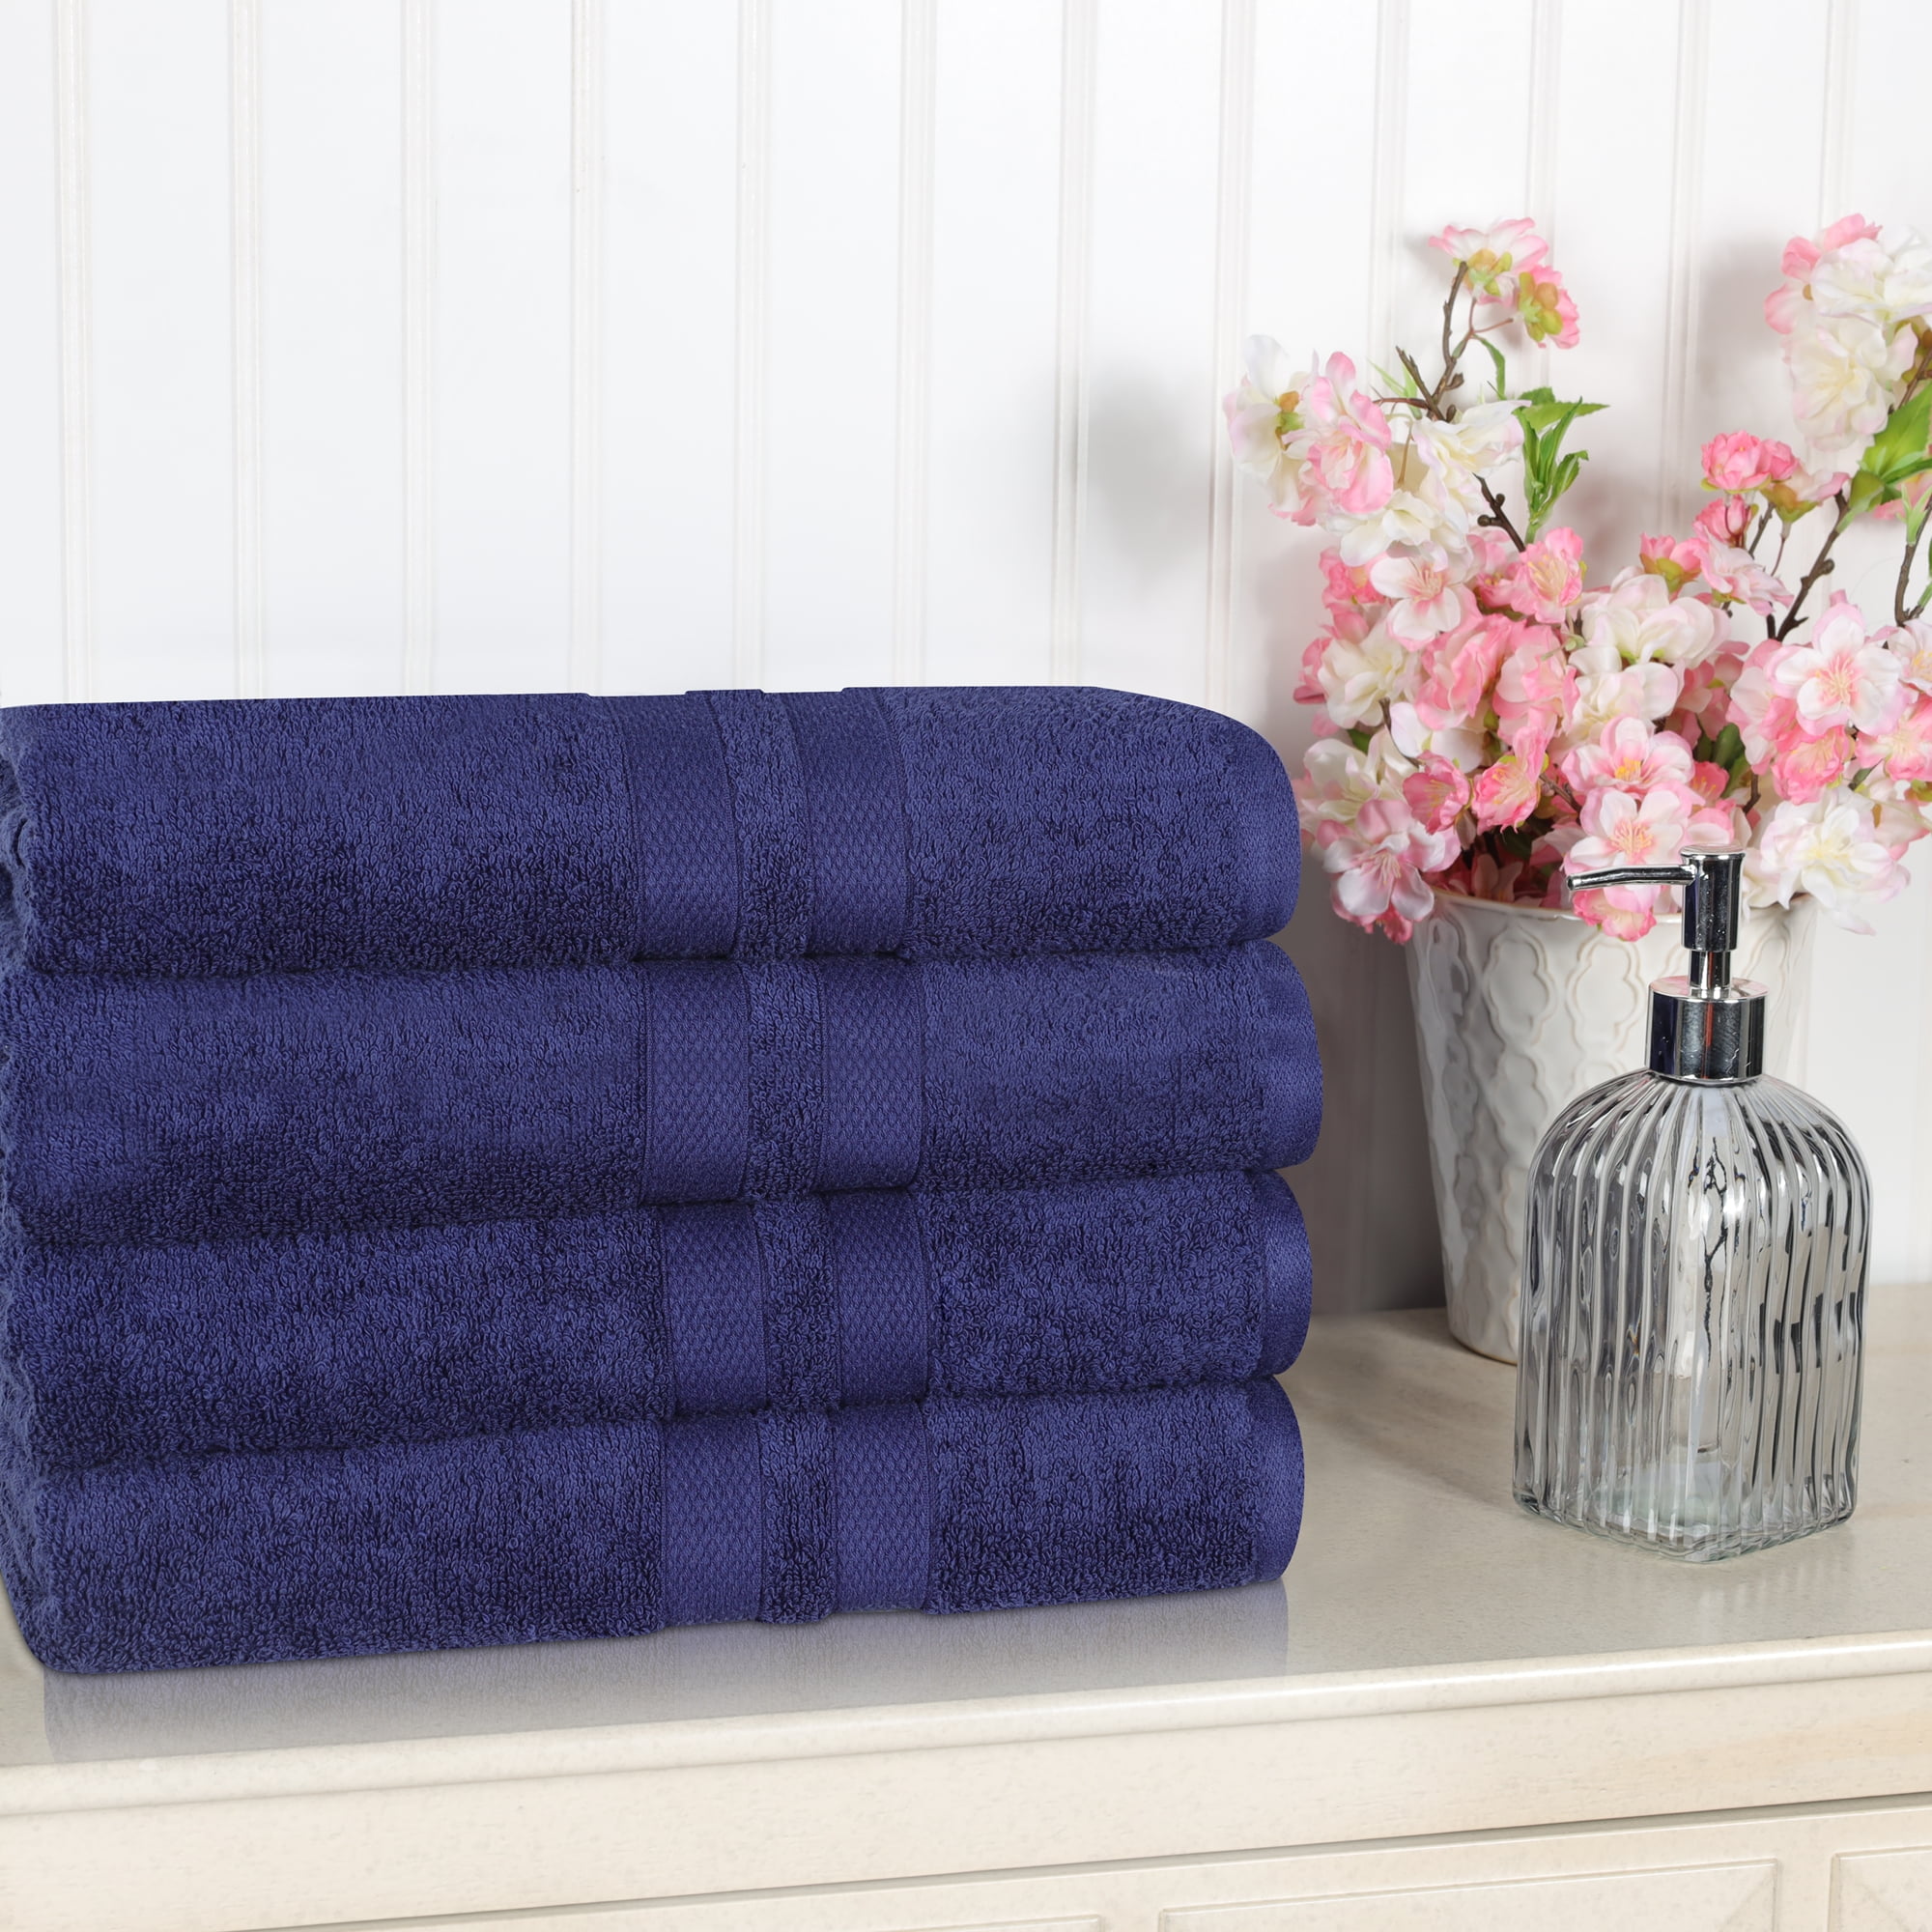 BNM Ultra-Soft Cotton Bath Towel Set, 4 Pieces, Navy Blue